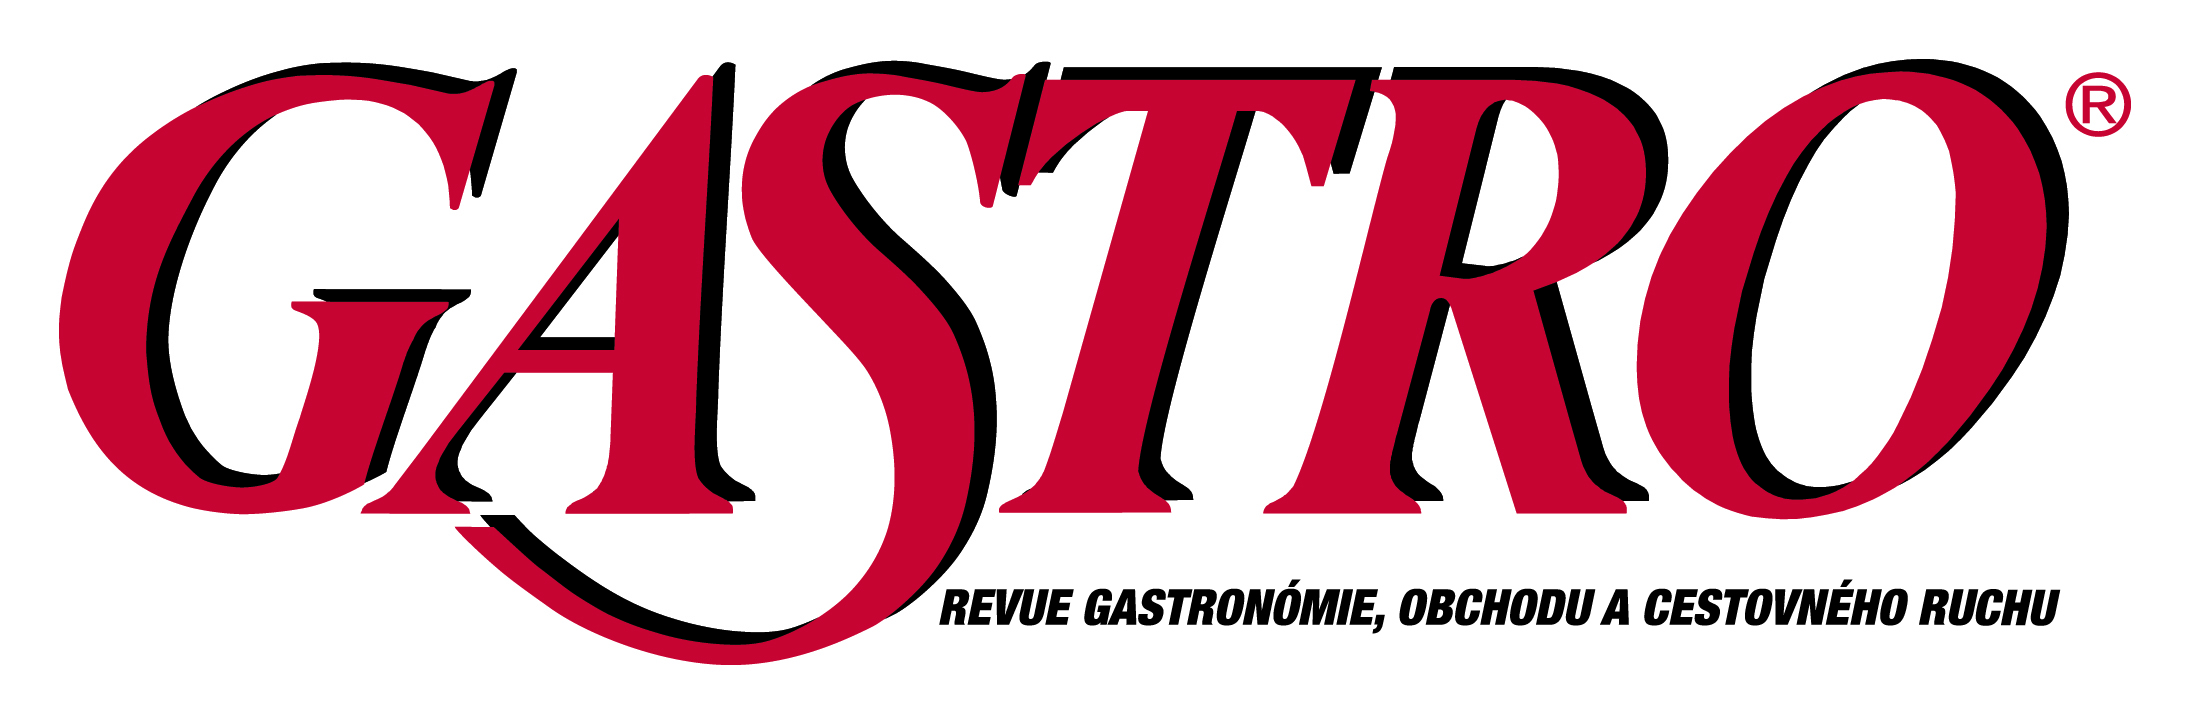 GASTRO - revue gastronómie, obchodu a cestovného ruchu